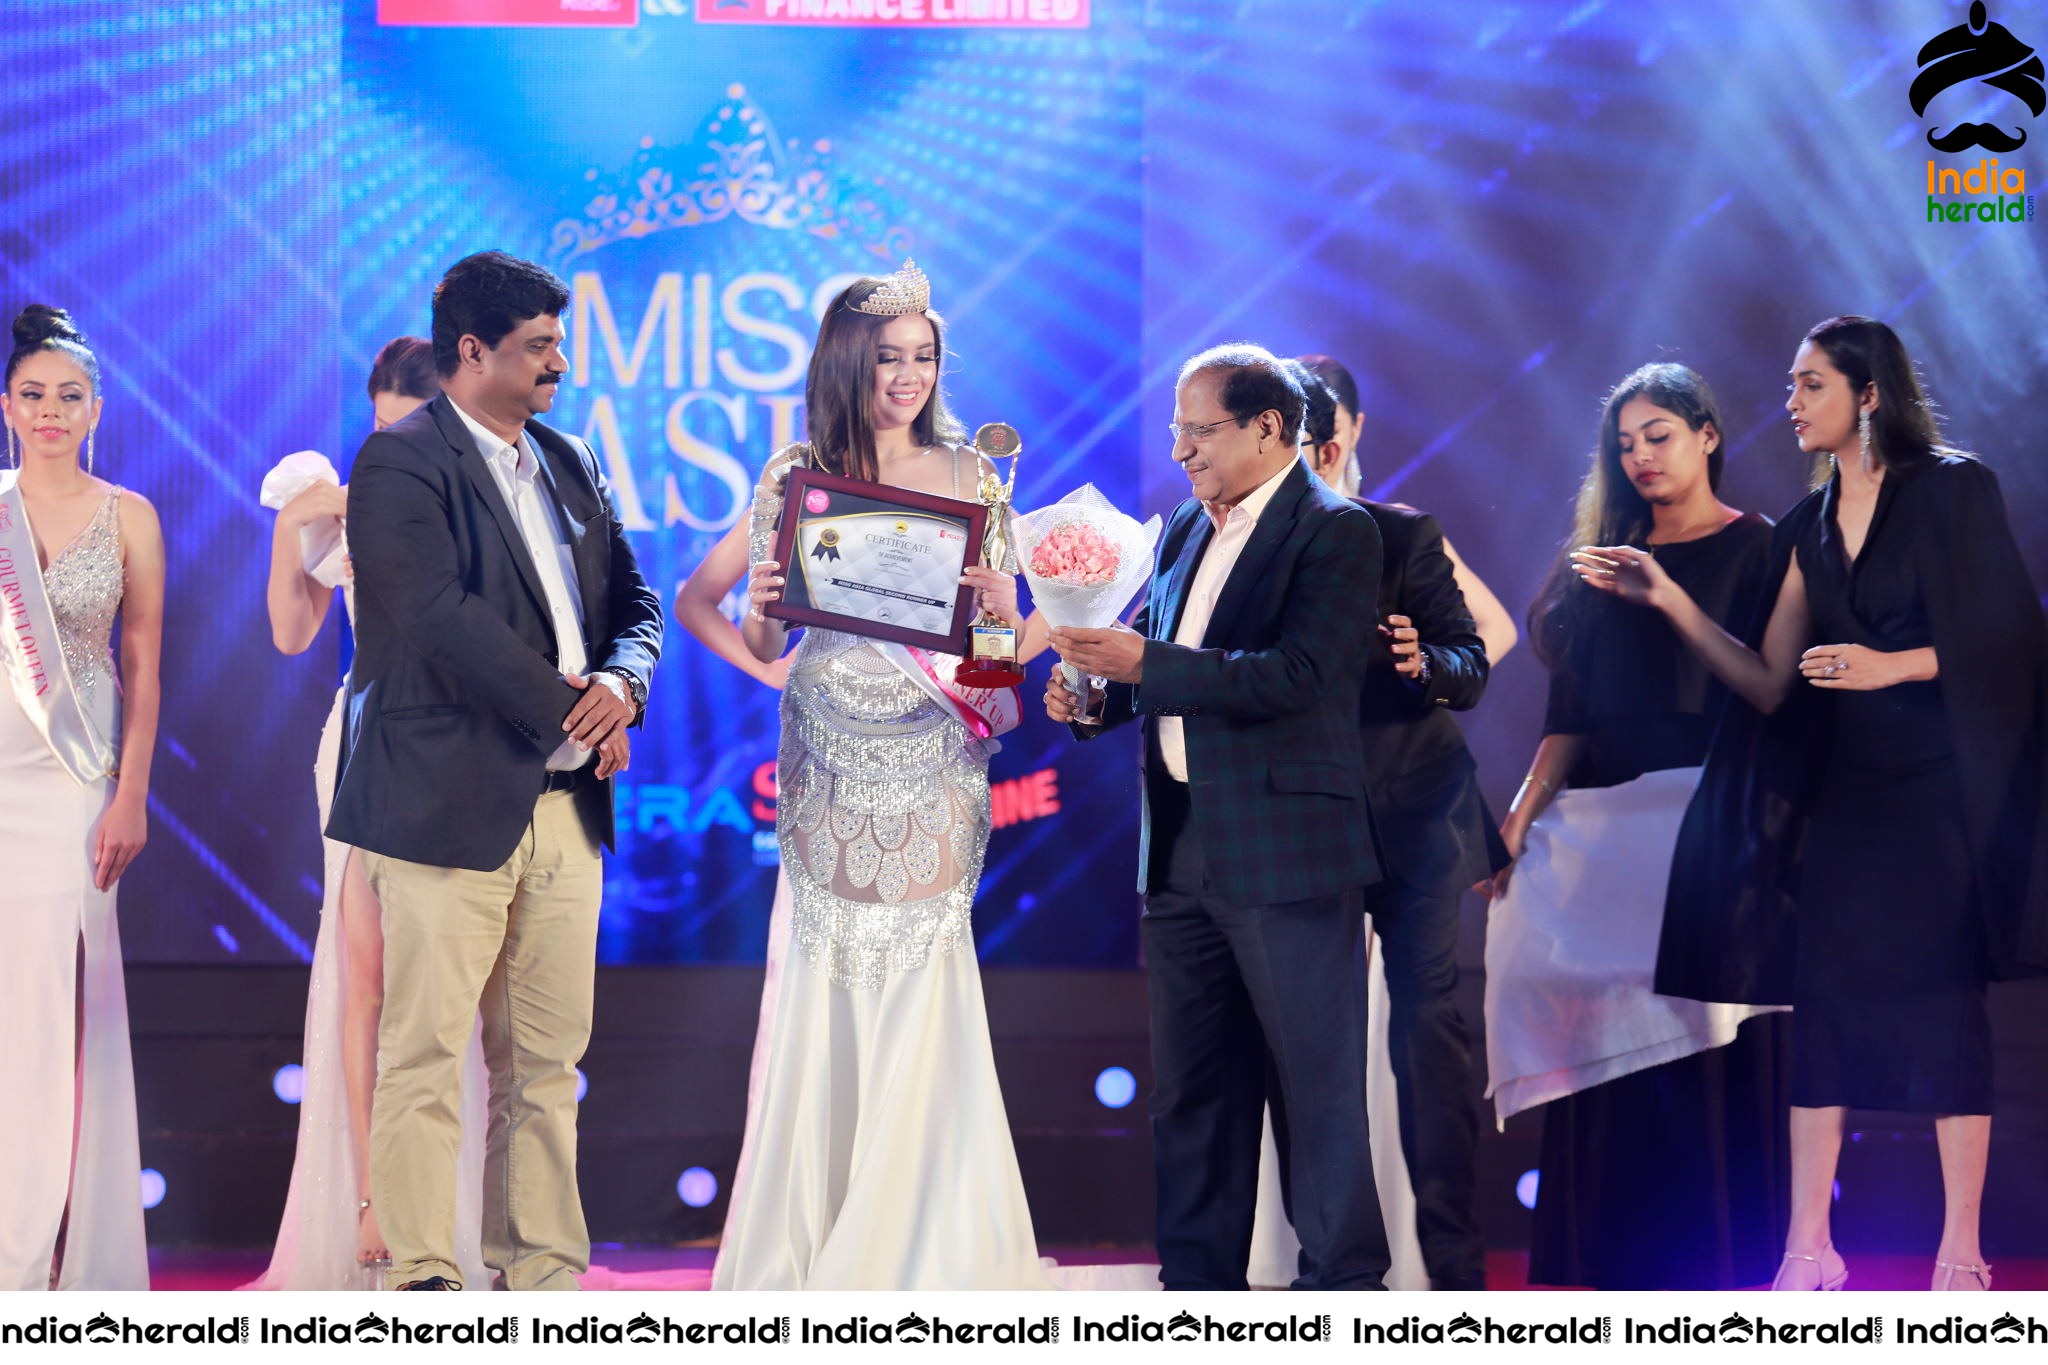 Mahindra And Manappuram Miss Asia Global 2019 Grand Final Fashion Show Set 3